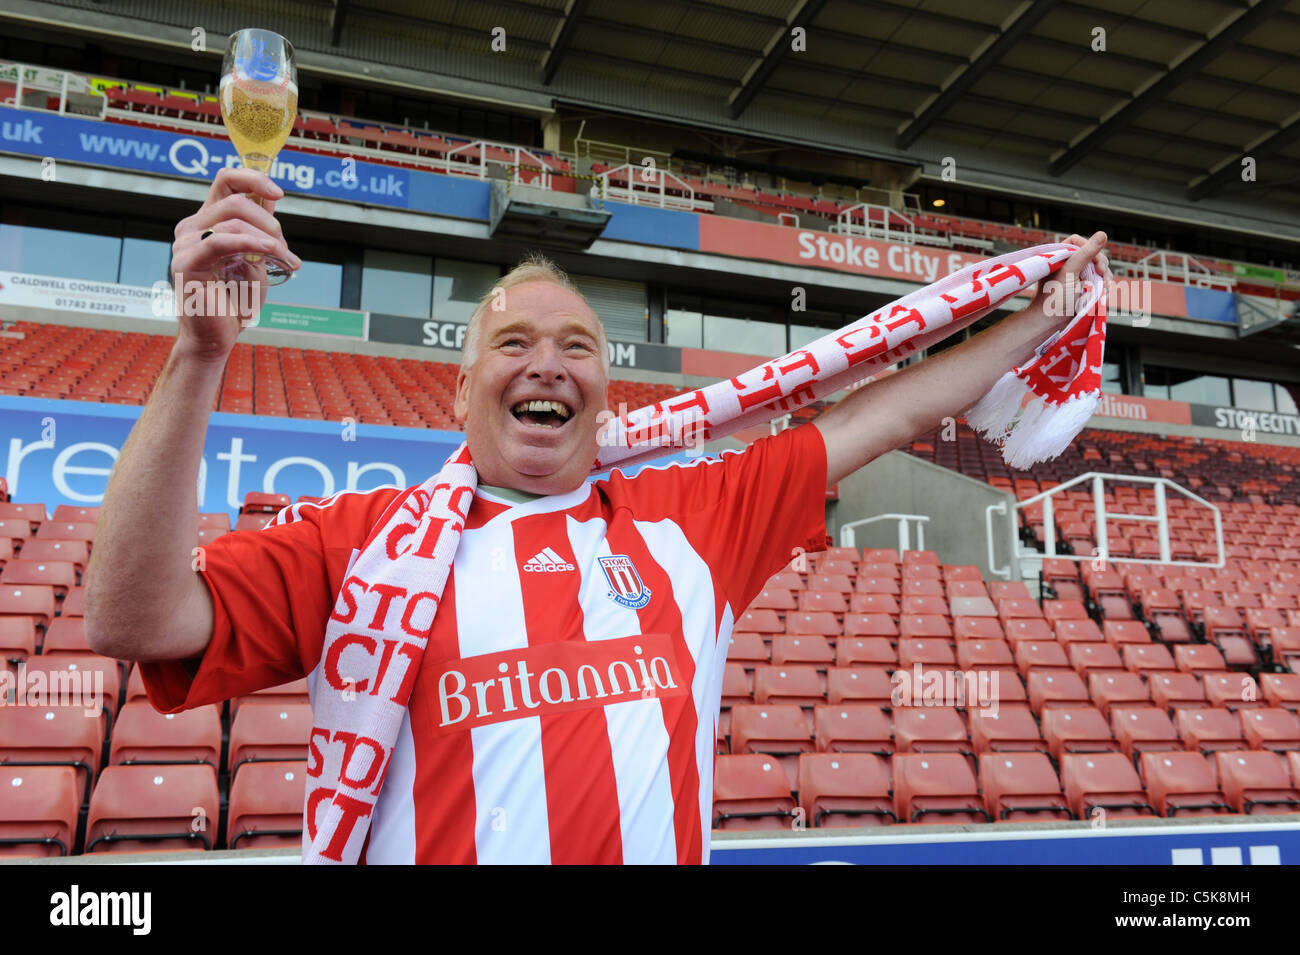 Stoke City football fan Gerald Blairs celebrates his £2,405,435 Lottery win Stock Photo